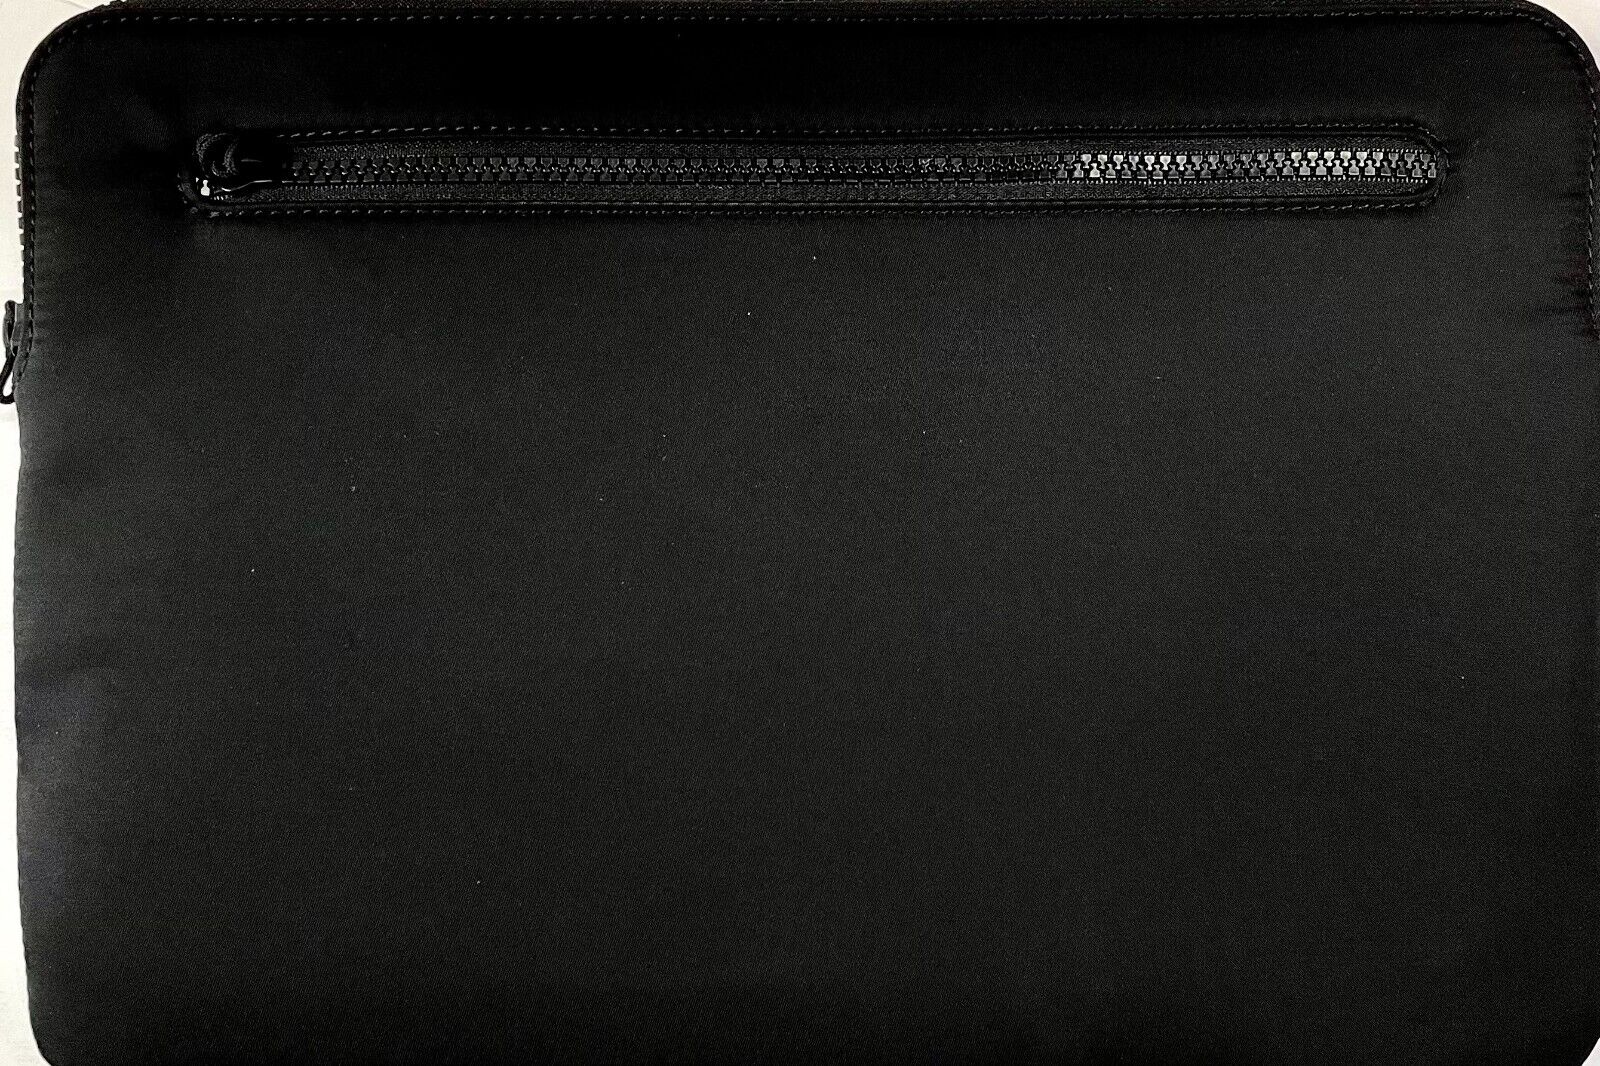 Incase Compact Sleeve in Flight Nylon for 13-inch MacBook Laptop